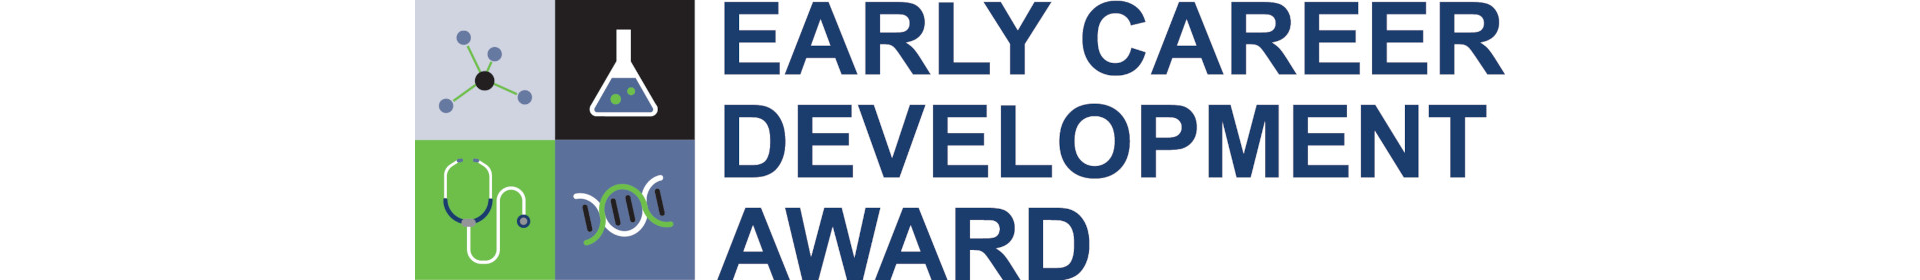 Early Career Development Award